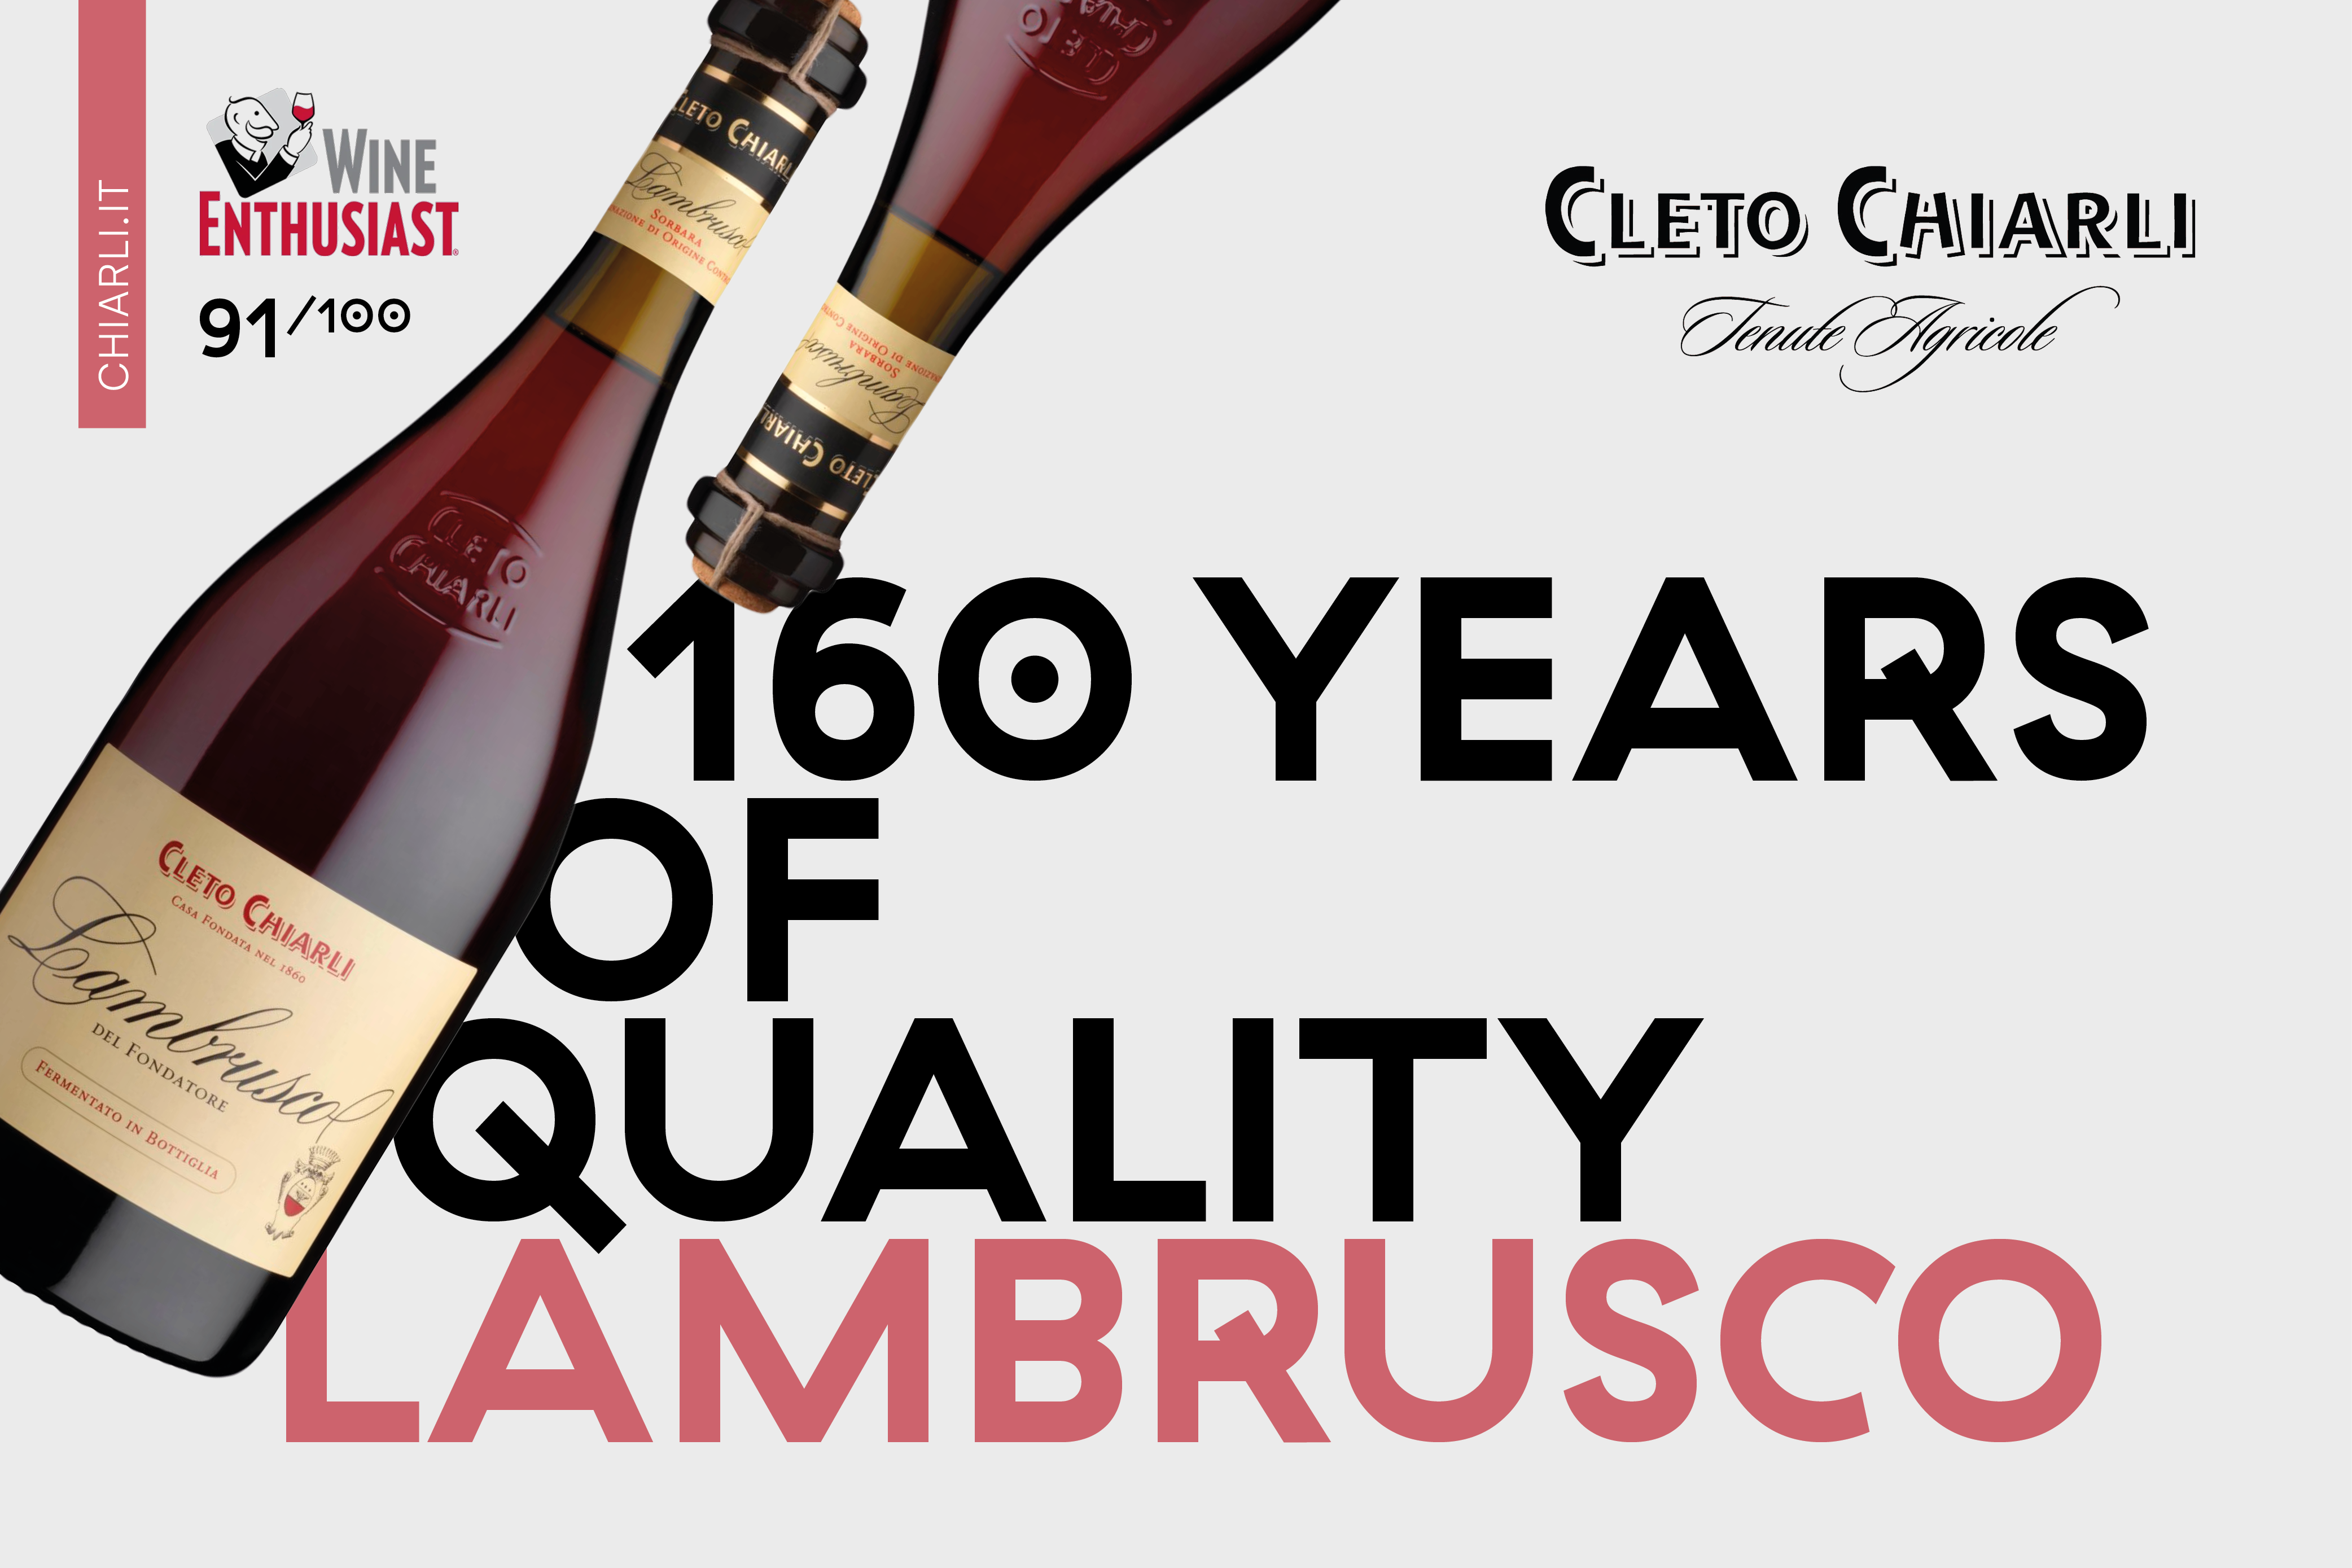 Wine Enthusiast awards 91 points to Cleto Chiarli Lambrusco del Fondatore 2021